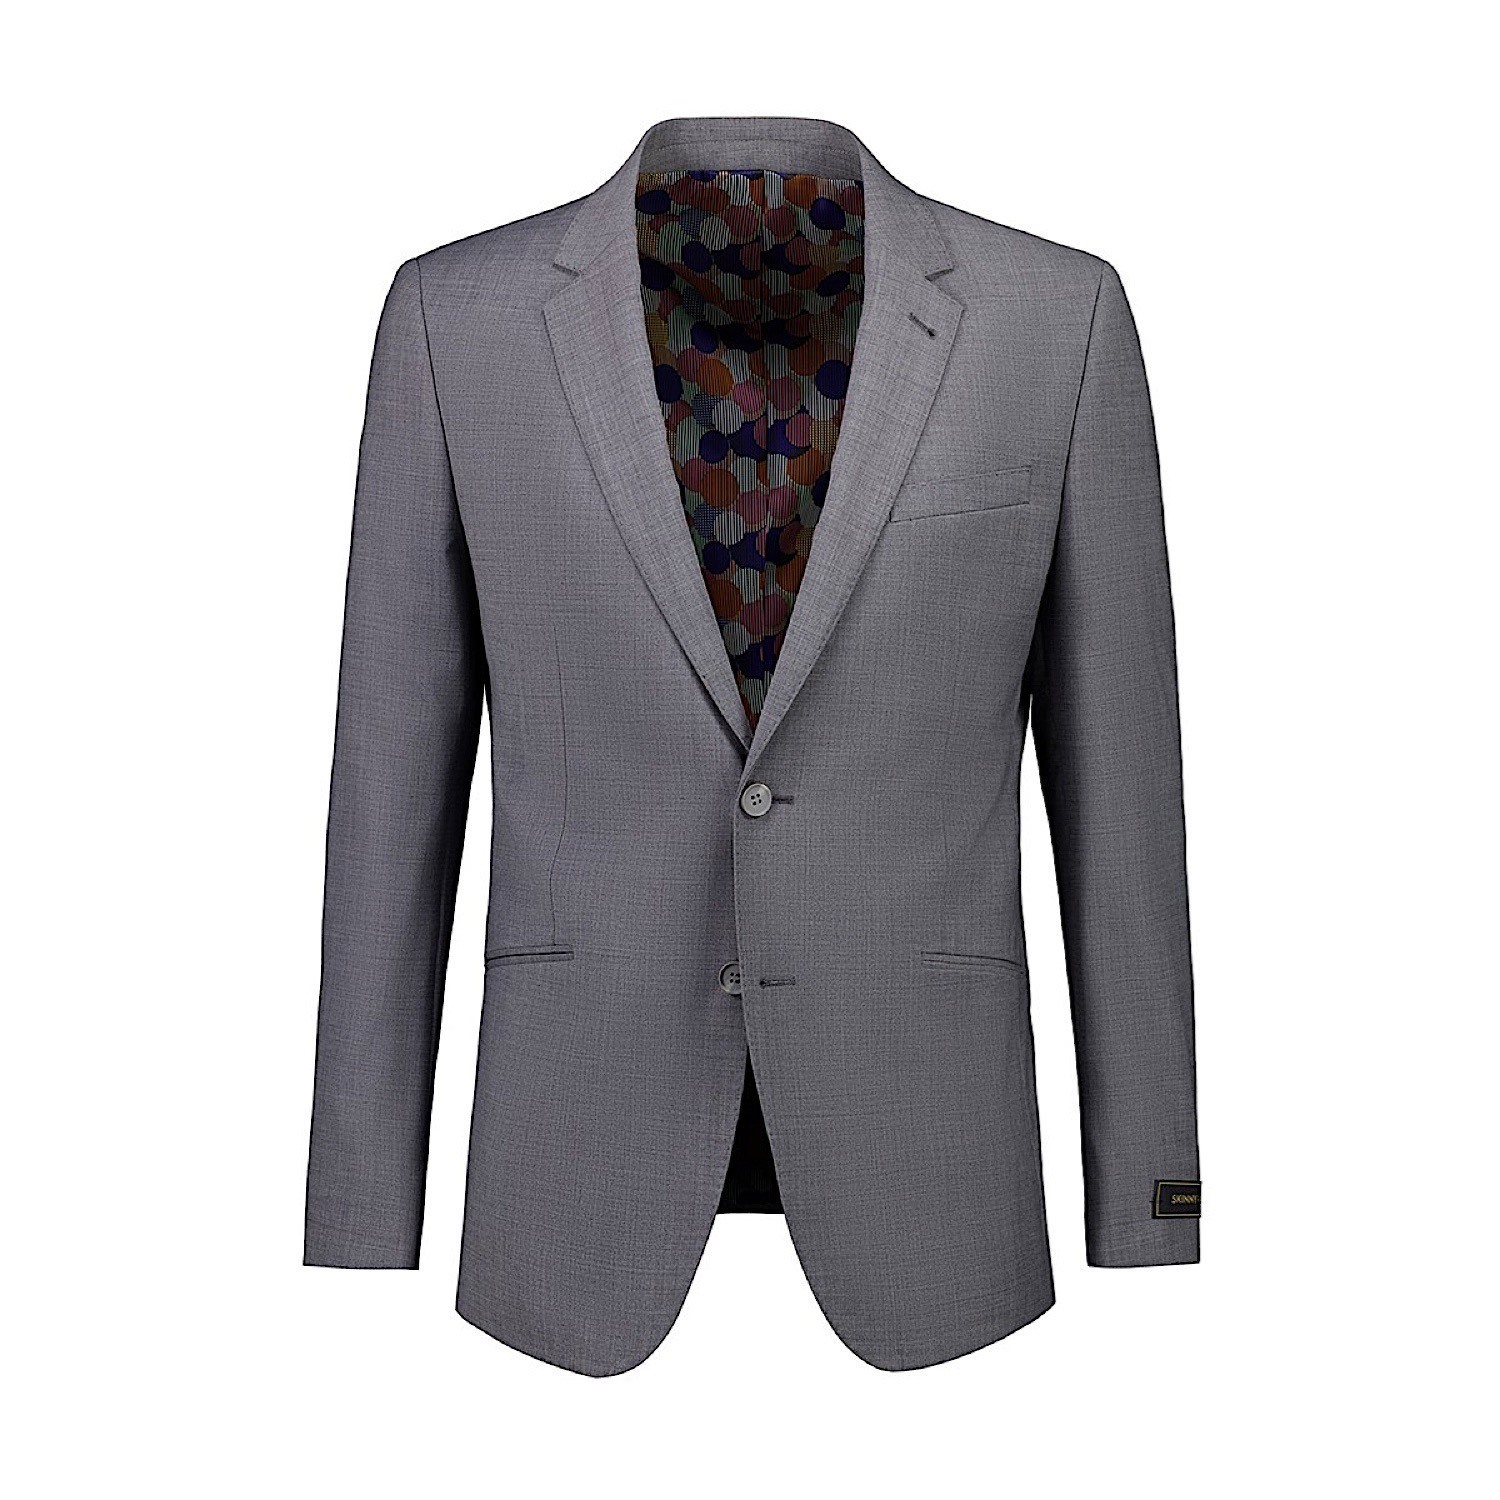 Uberstone Jack Silver Suit Combo Deal | Port Phillip Shop